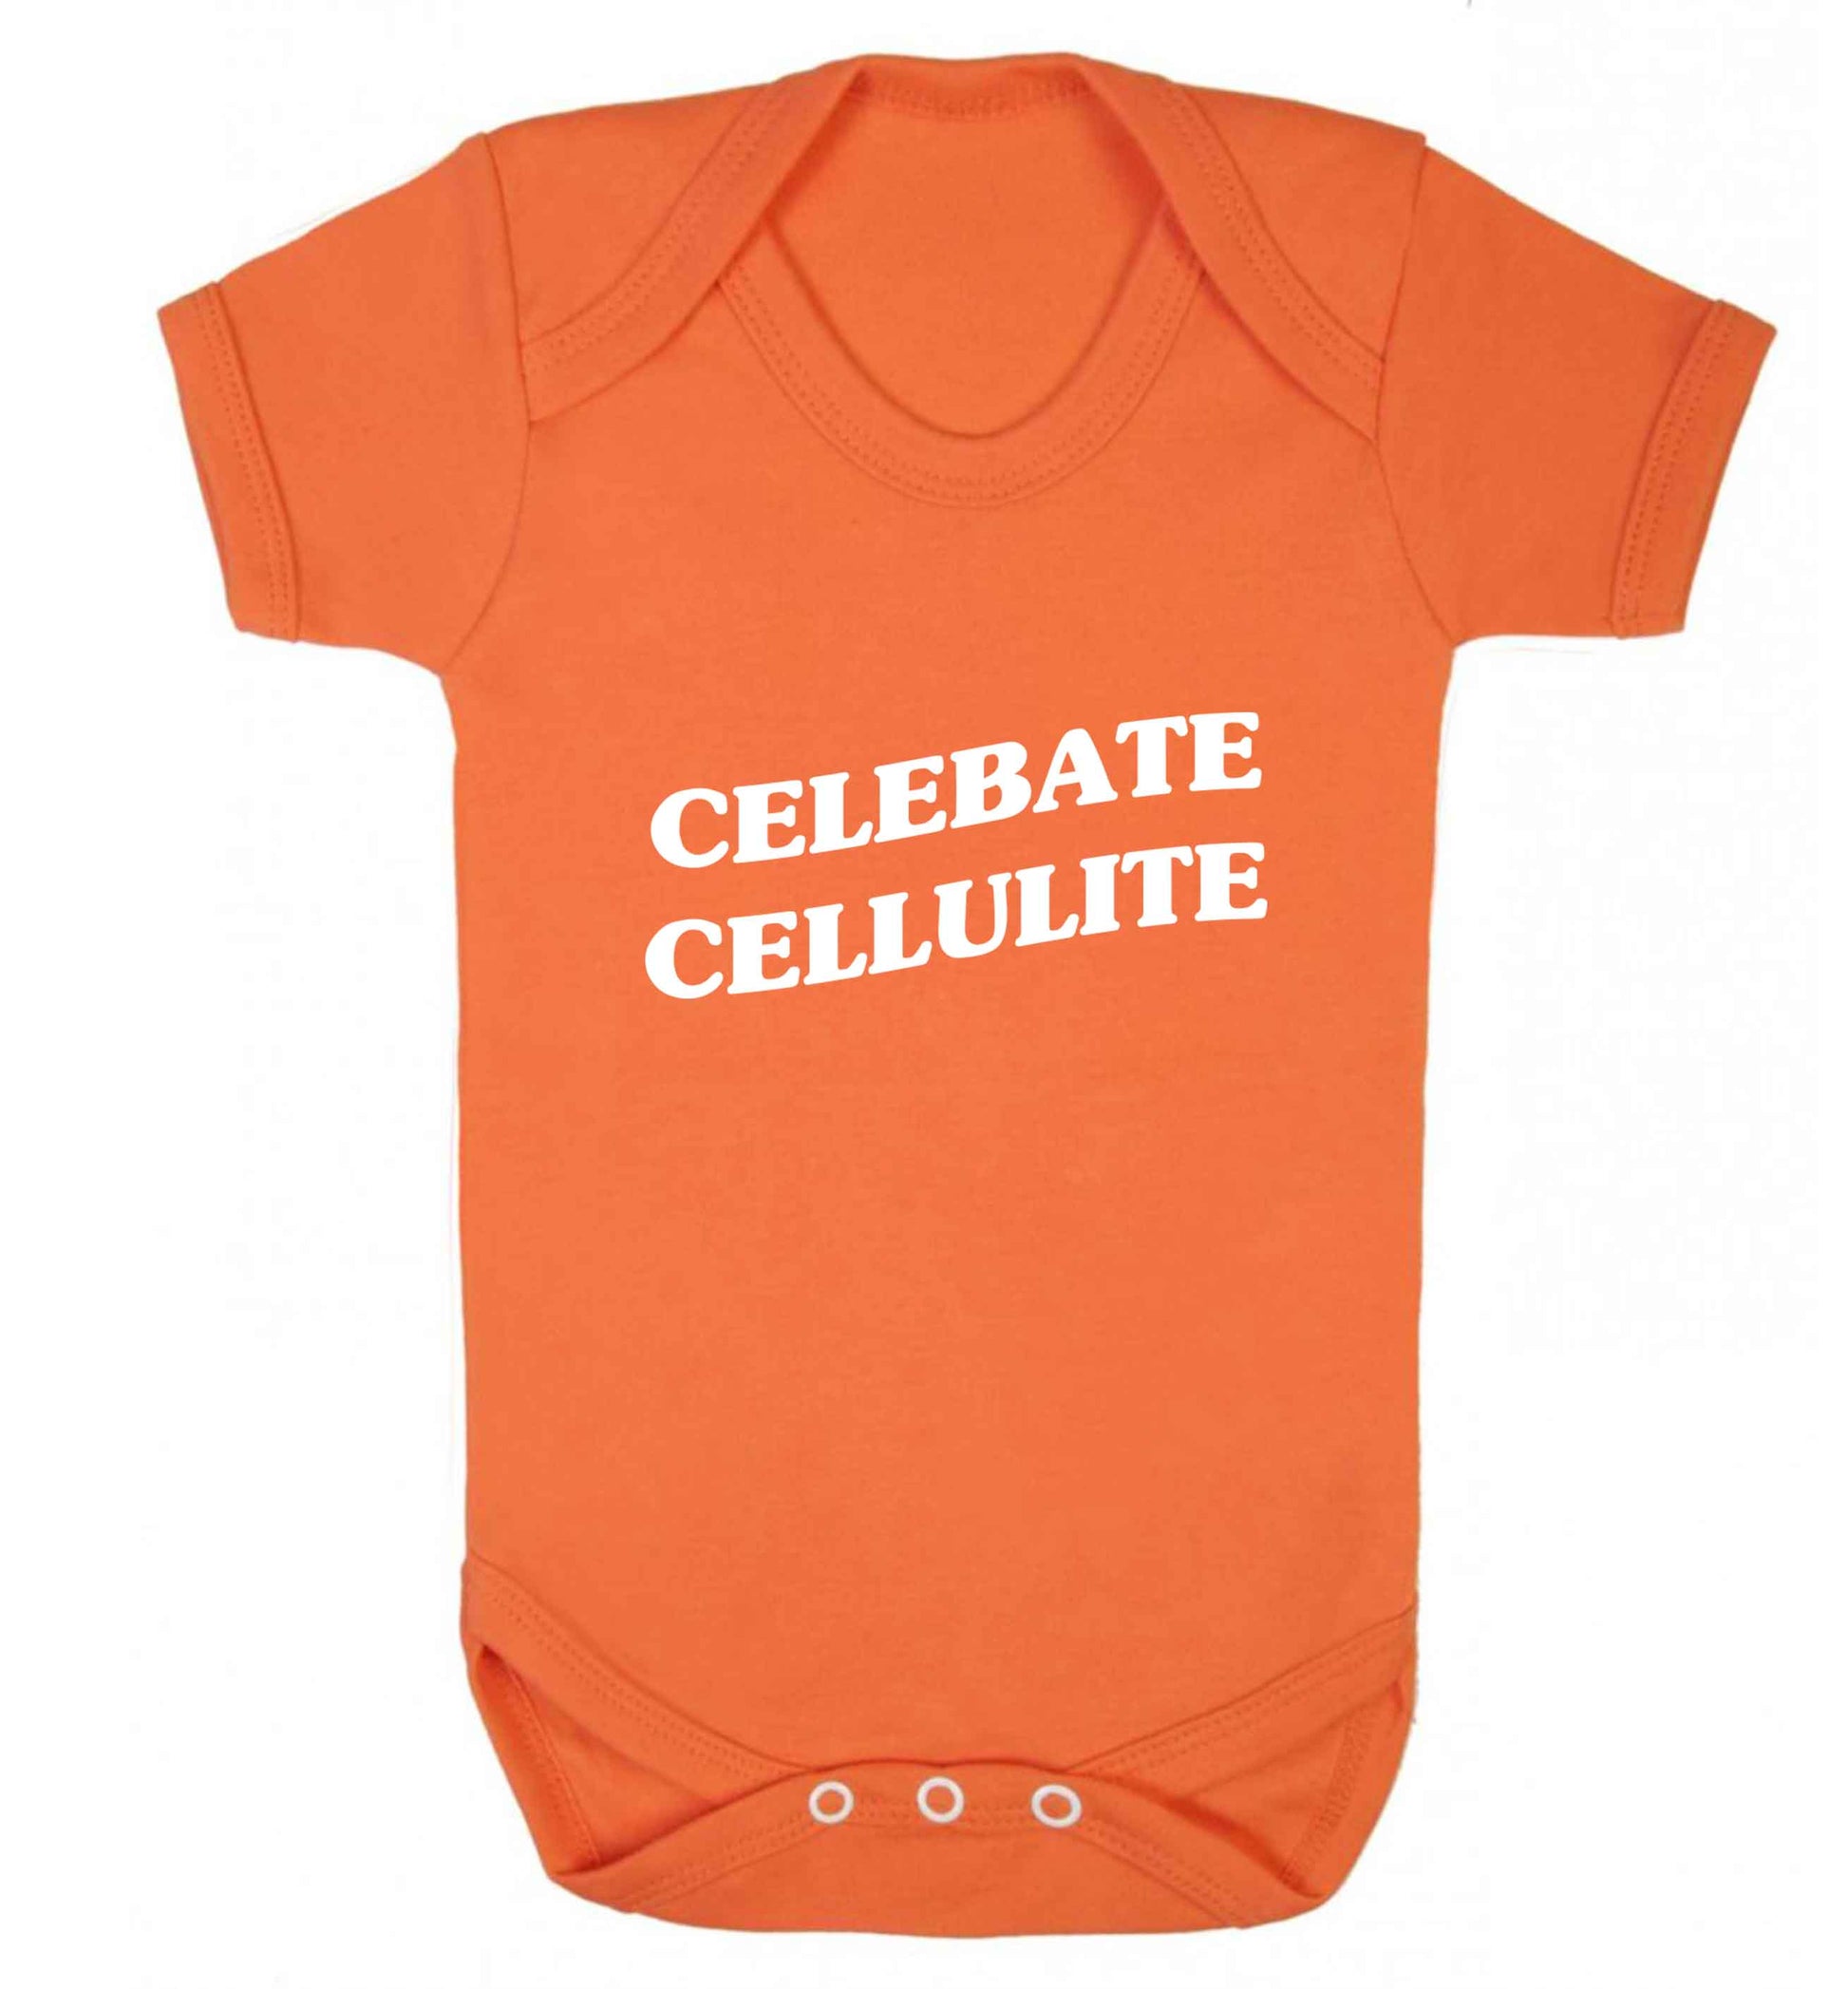 Celebrate cellulite baby vest orange 18-24 months